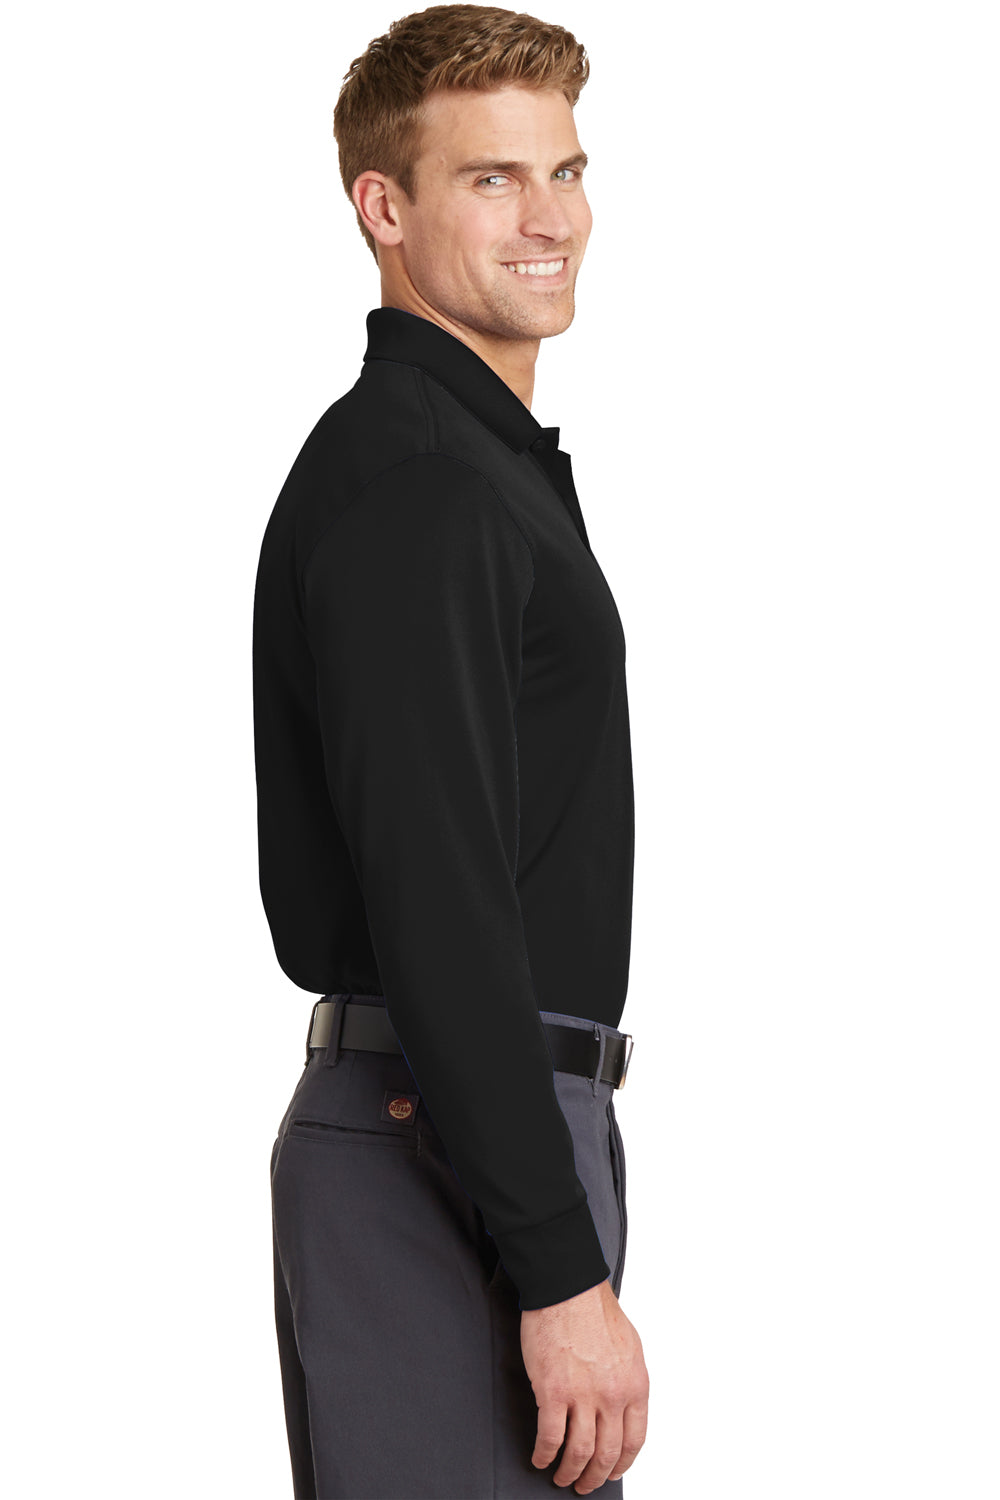 CornerStone CS412LS Mens Select Moisture Wicking Long Sleeve Polo Shirt Black Side